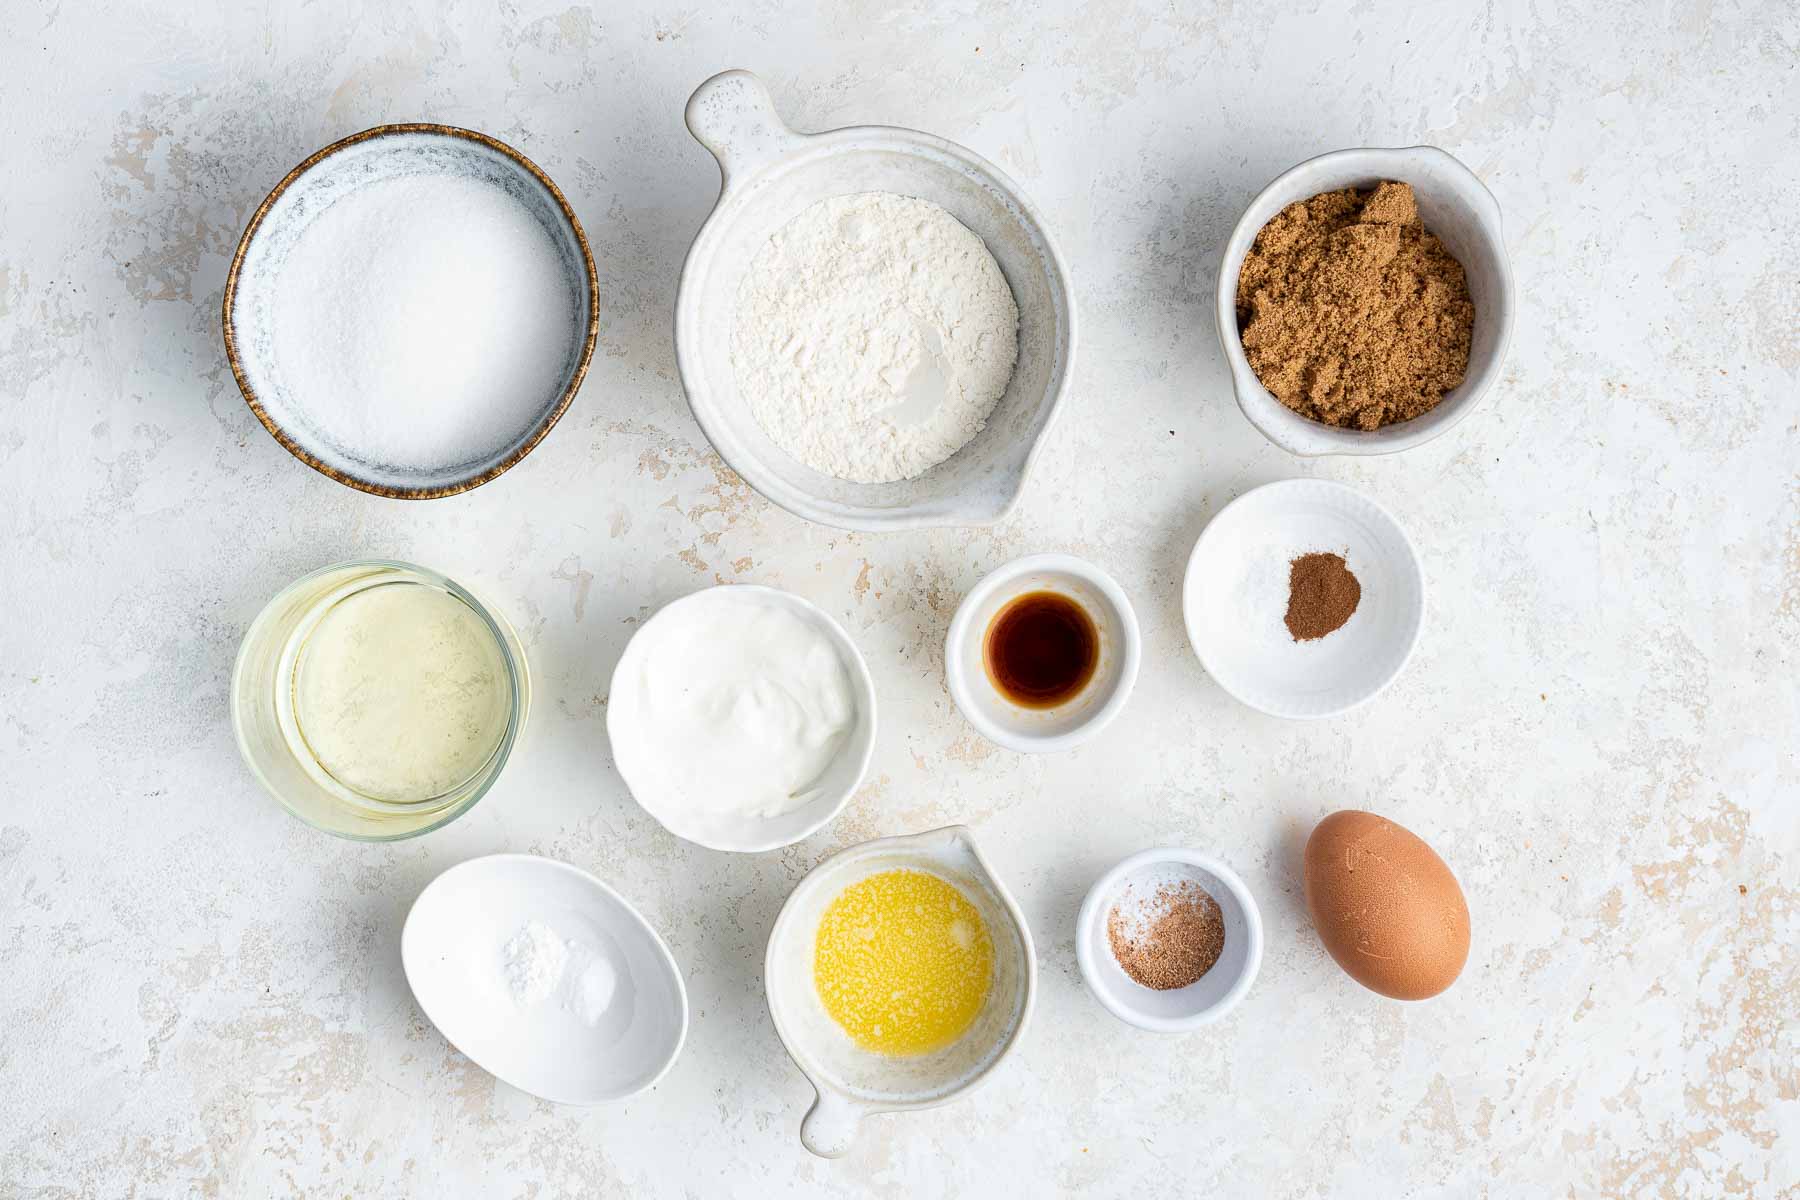 Small bowls of flour, sugar, brown sugar, egg, and vanilla on white surface.